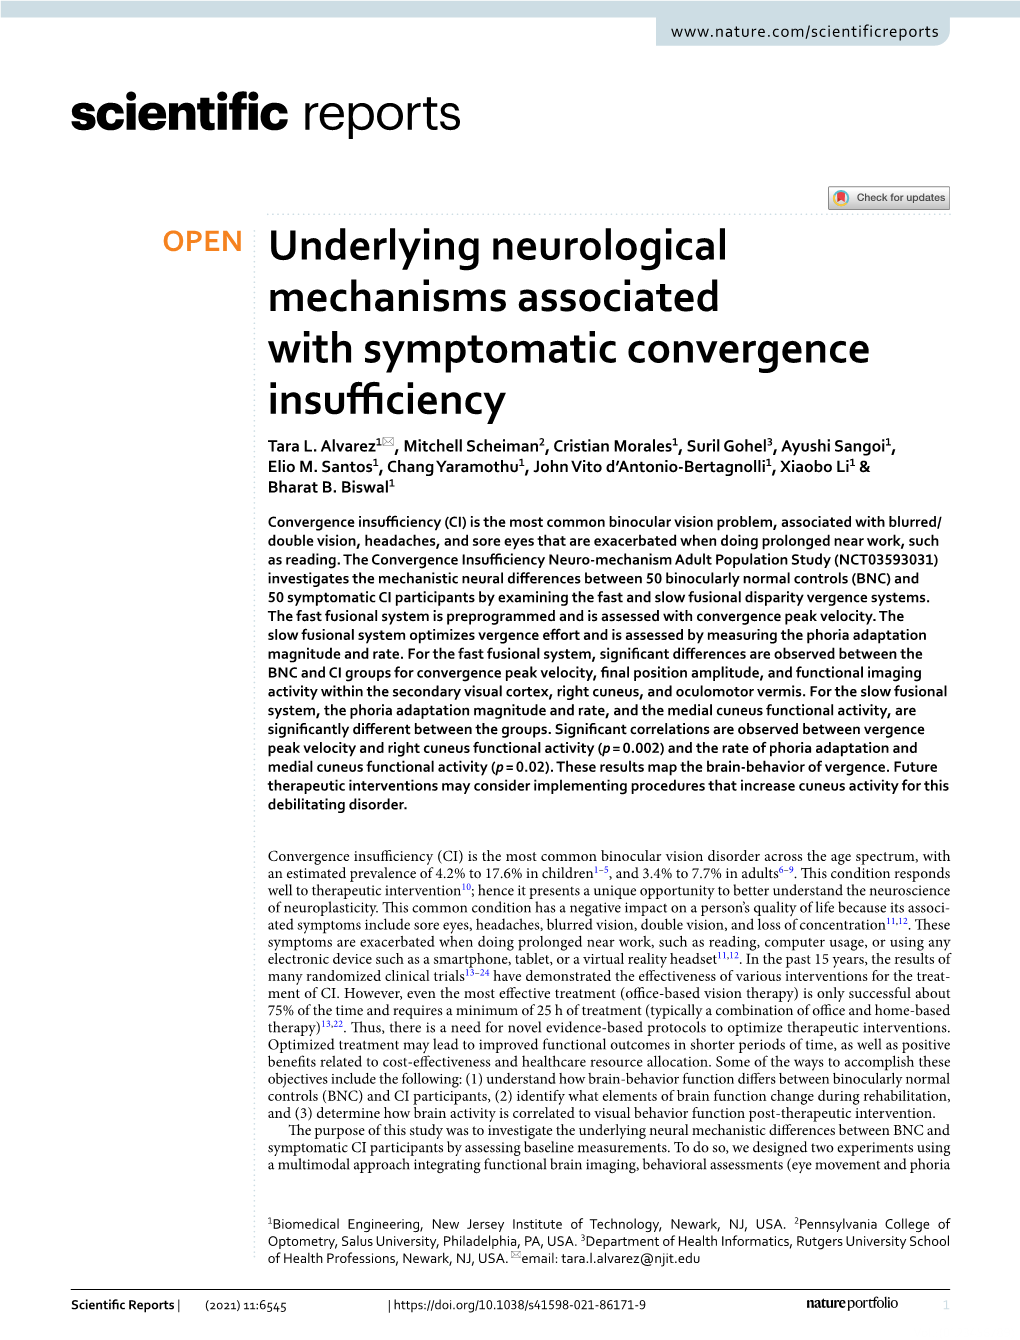 Underlying Neurological Mechanisms Associated with Symptomatic Convergence Insufciency Tara L